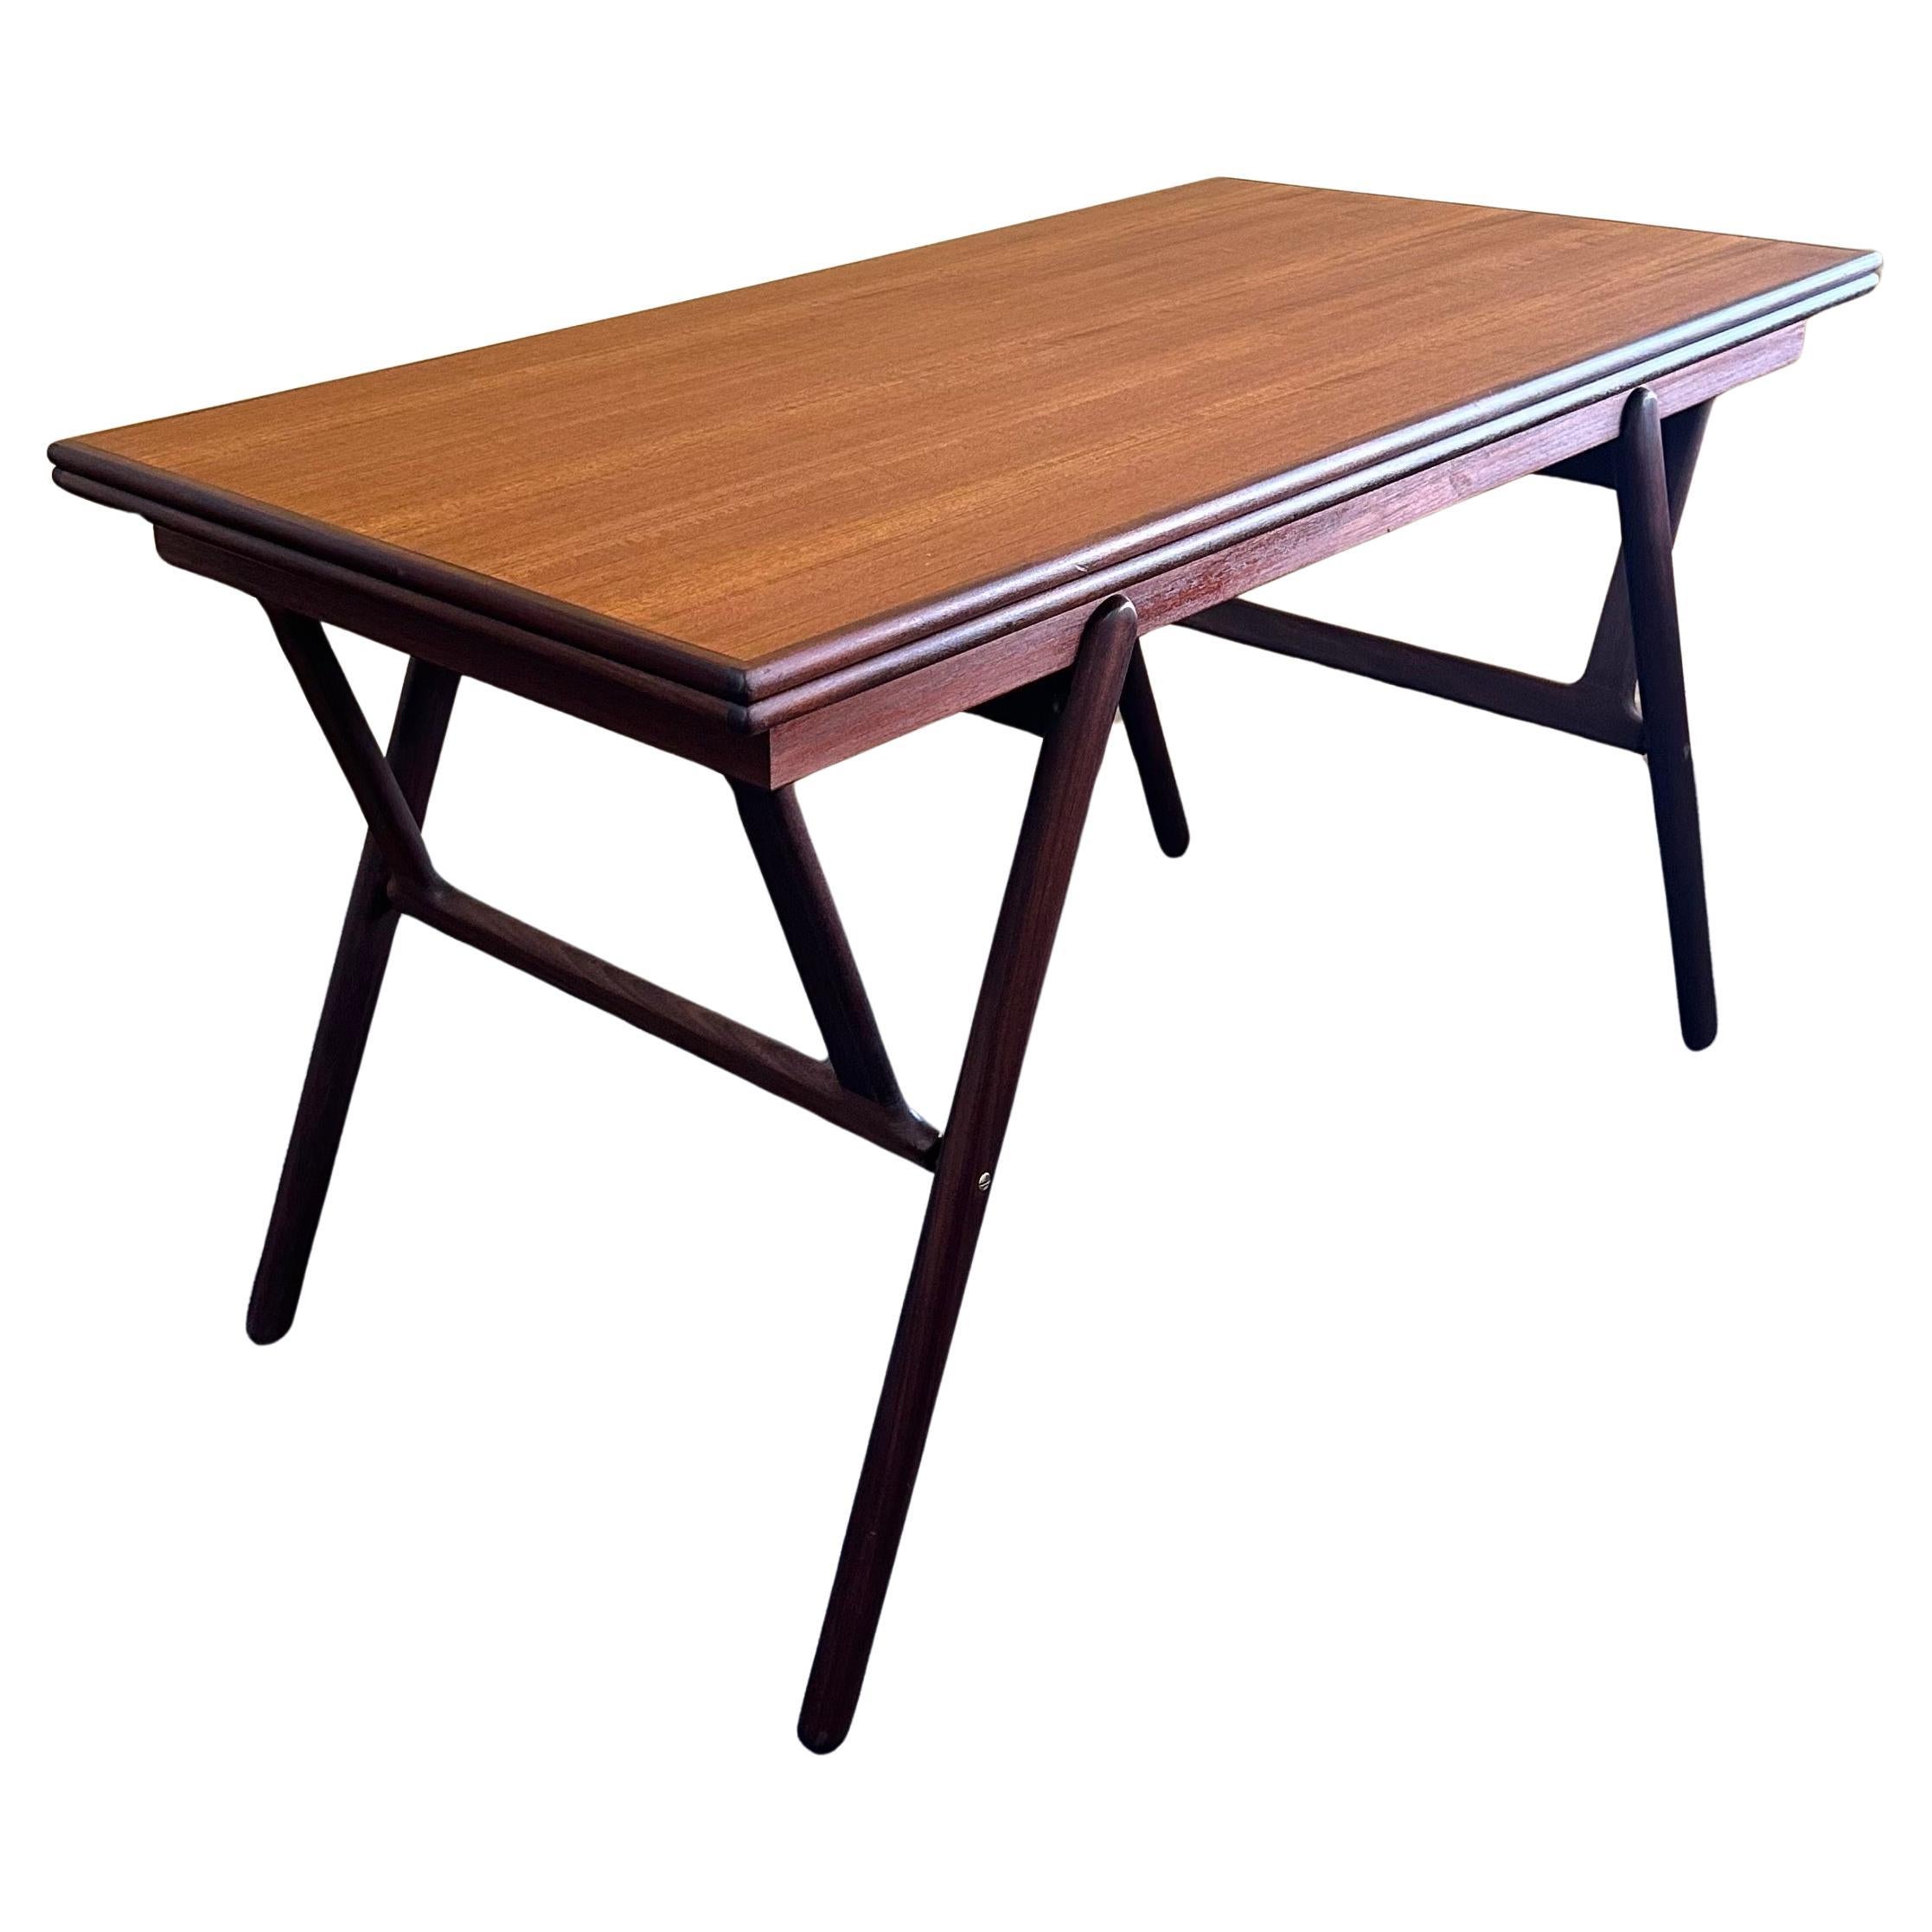 Danish Modern "Magic" Adjustable Teak Desk / Dining Table / Coffee Table